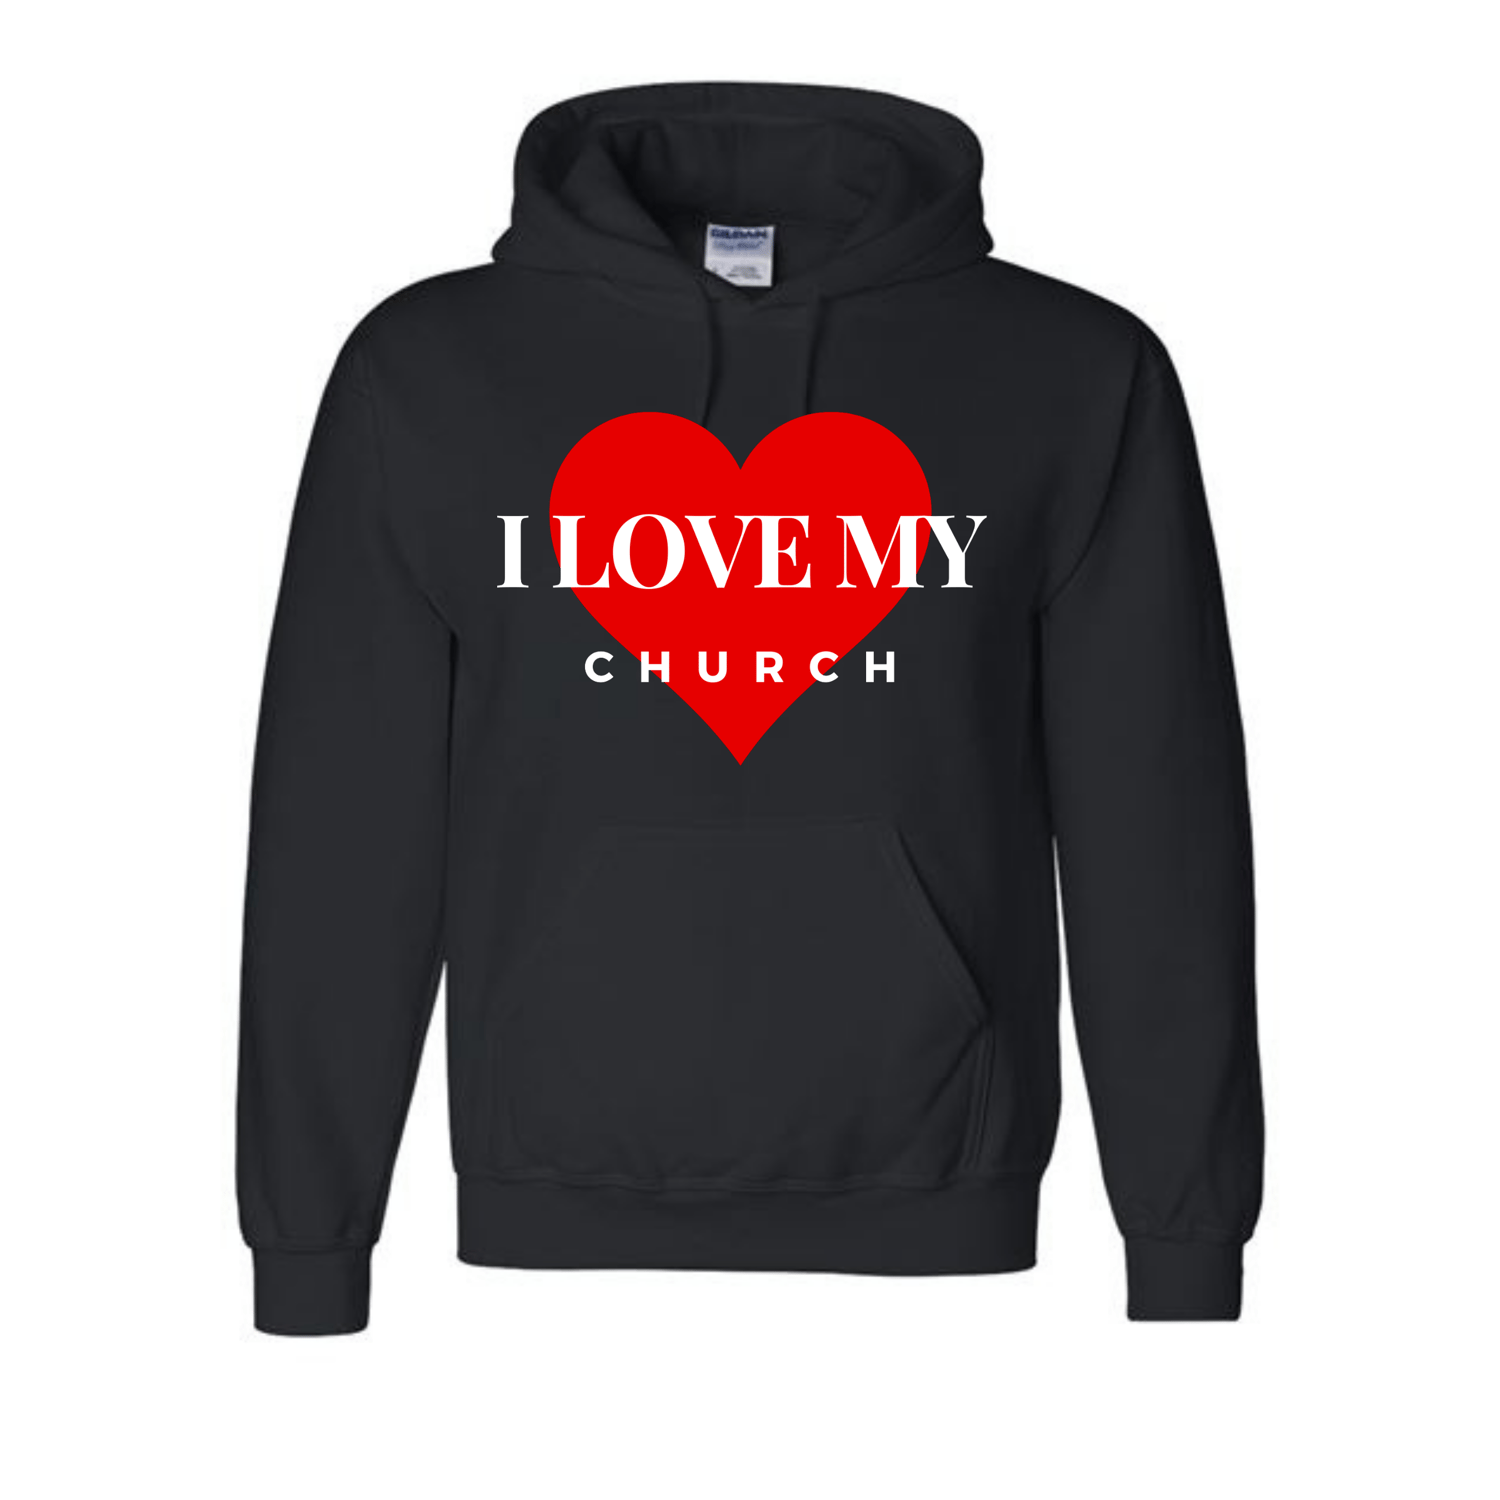 Image of "I LOVE MY CHURCH" Unisex Faith-Based Black Hoodie 